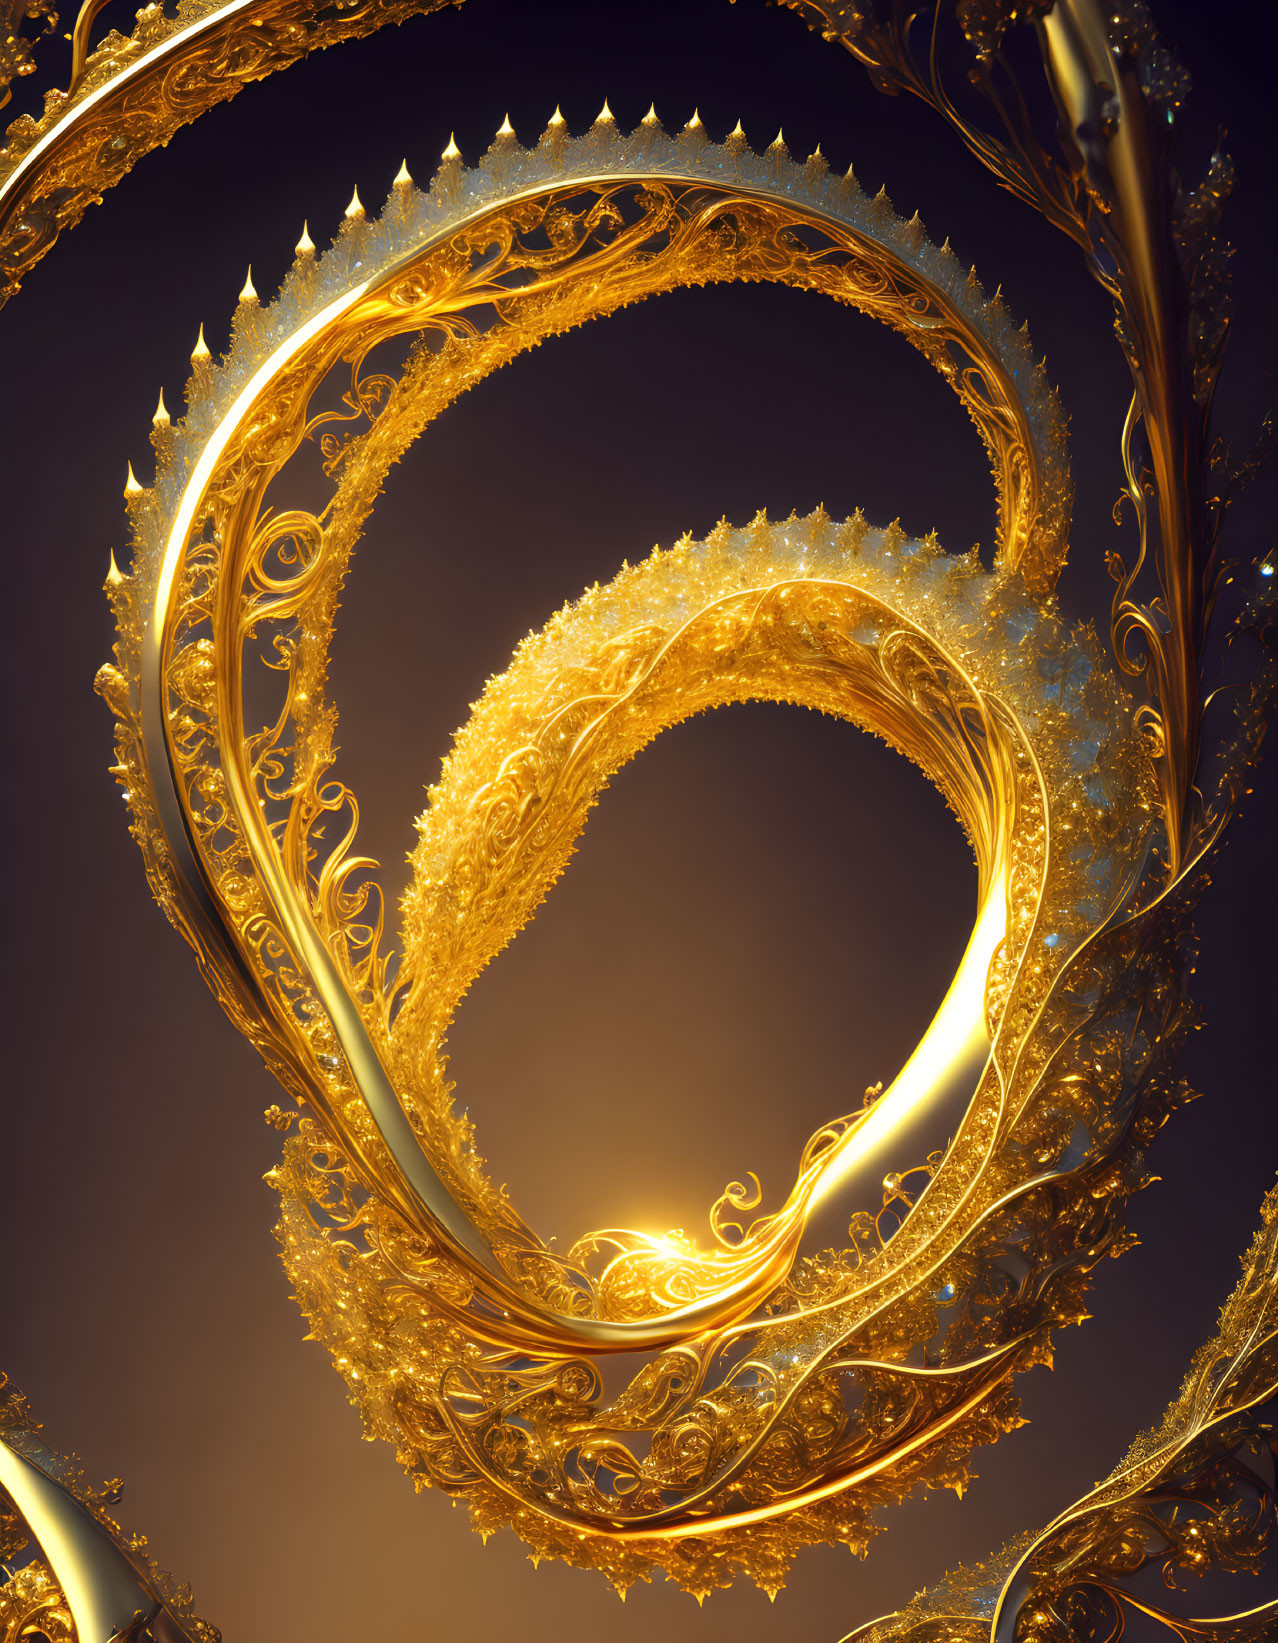 Golden Fractal Spiral with Filigree Patterns on Dark Background